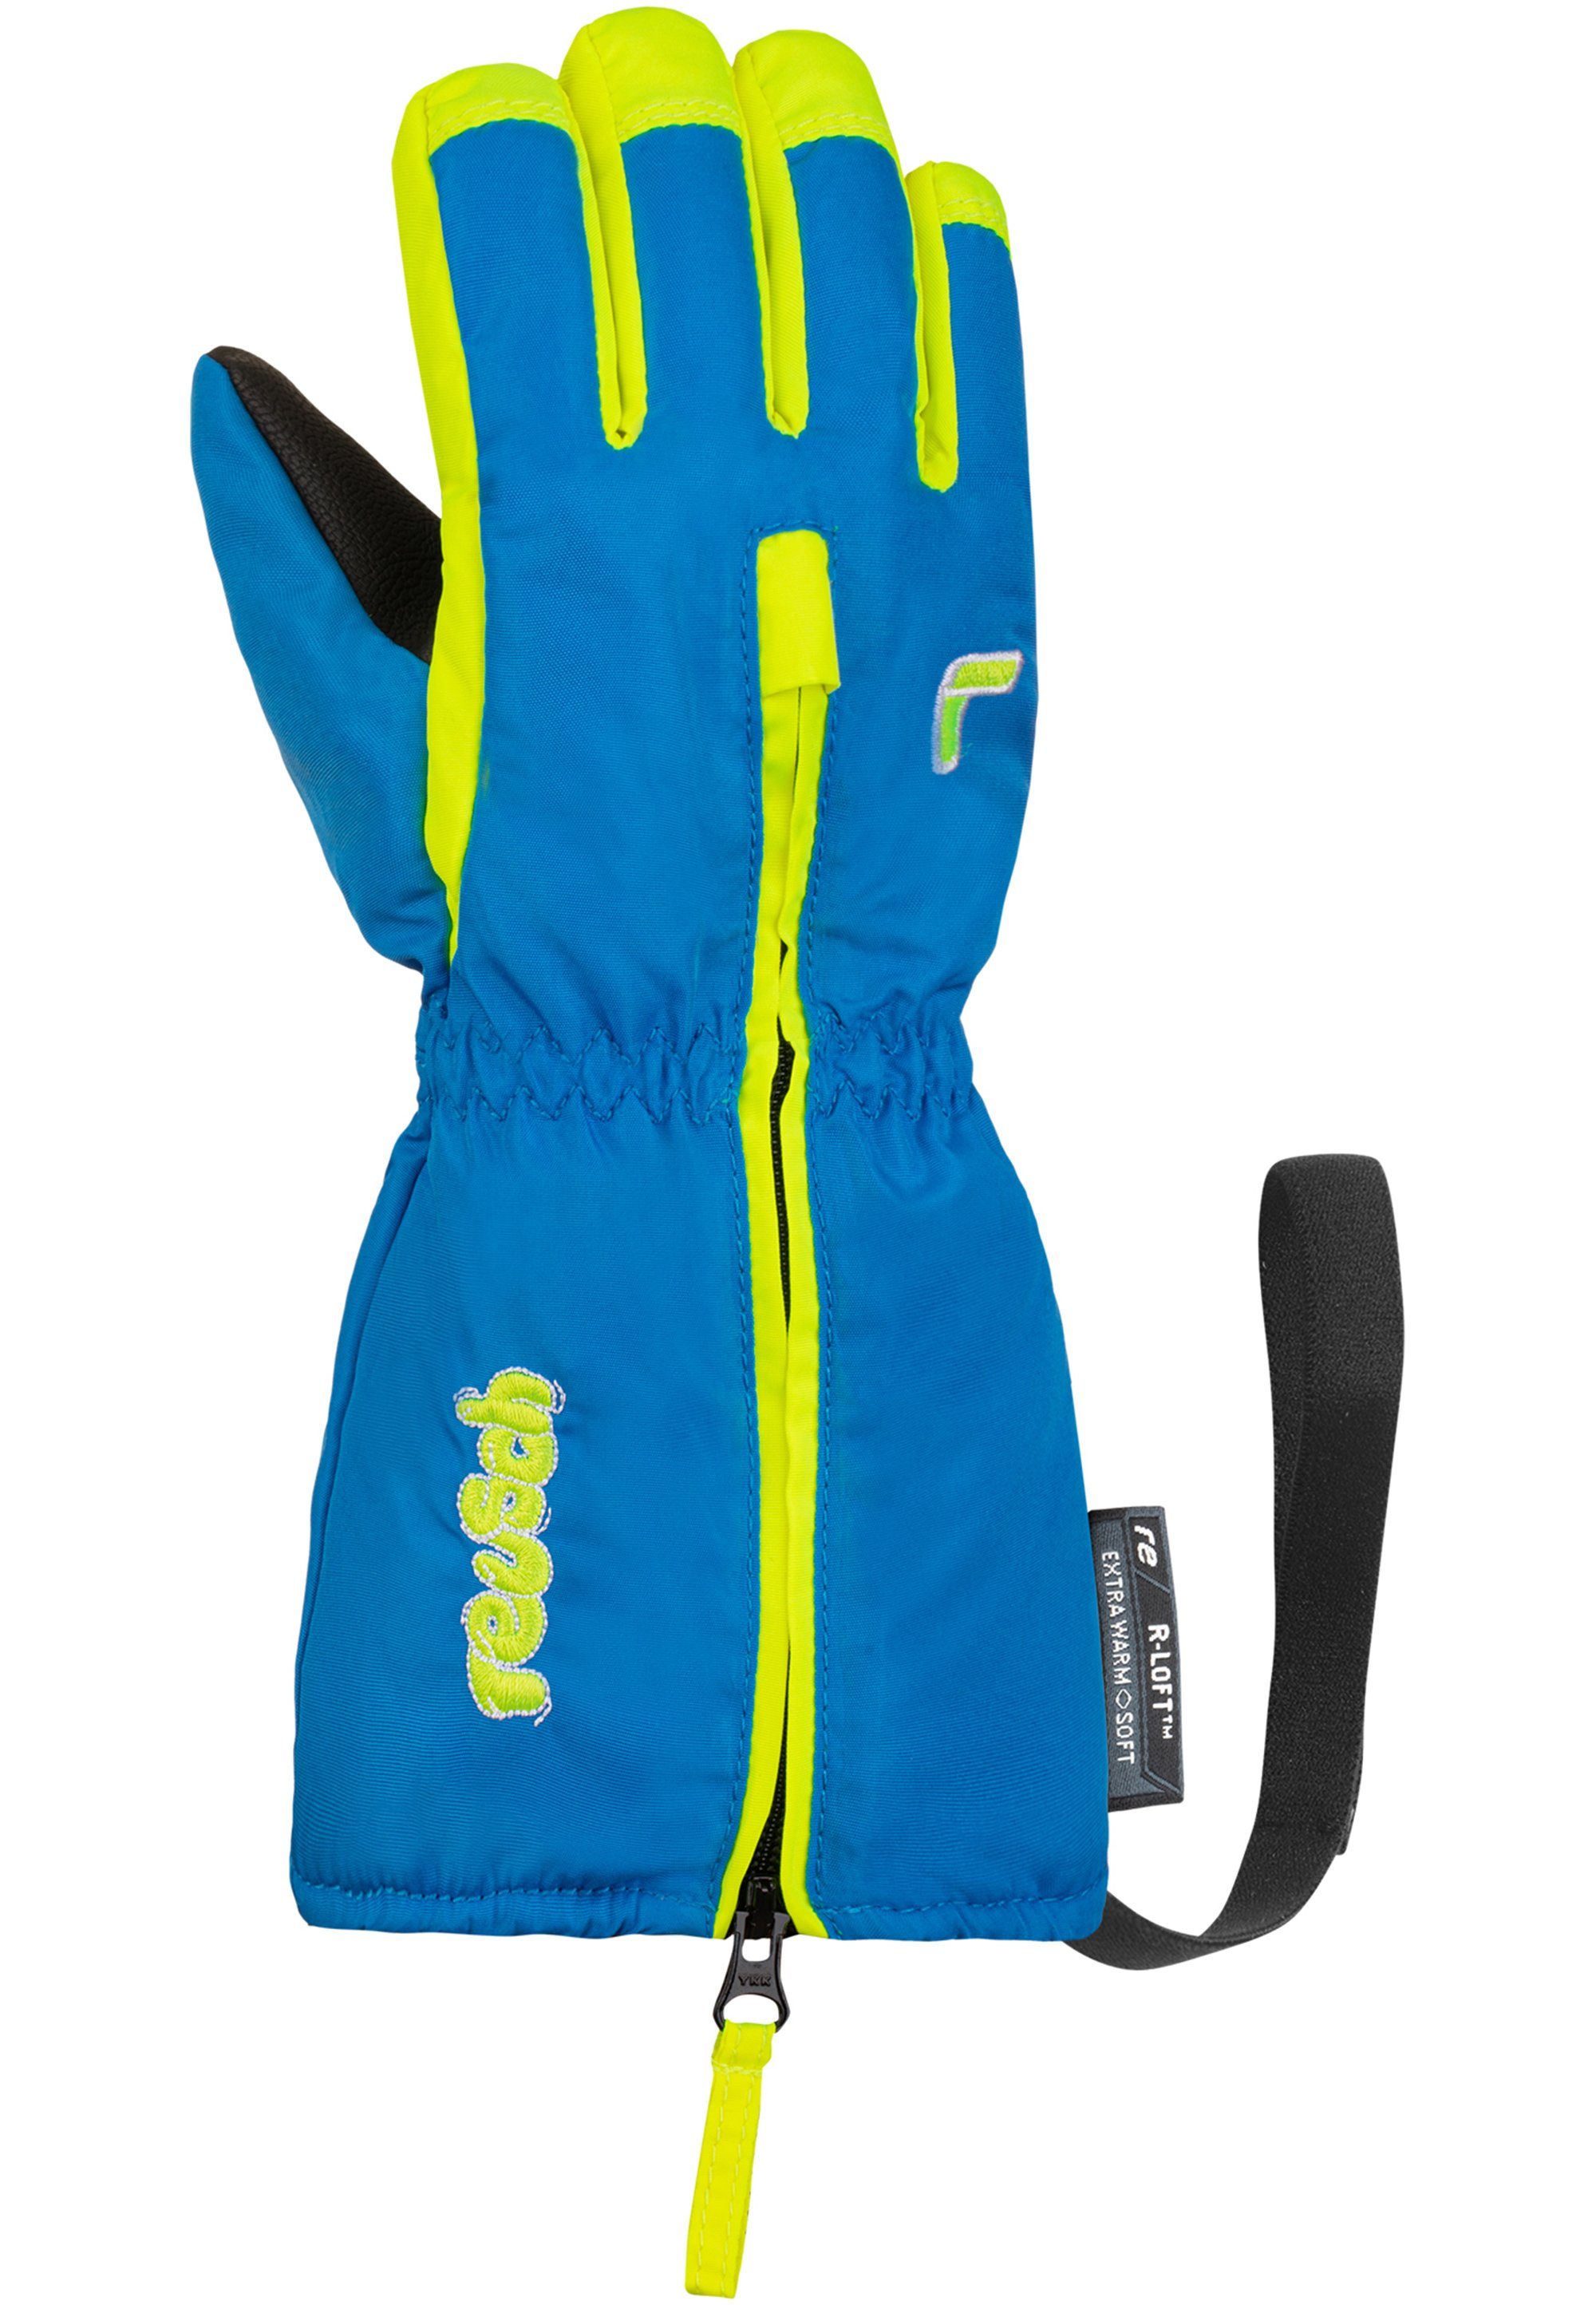 Reusch Skihandschuhe Stulpe mit gelb-blau langer Tom